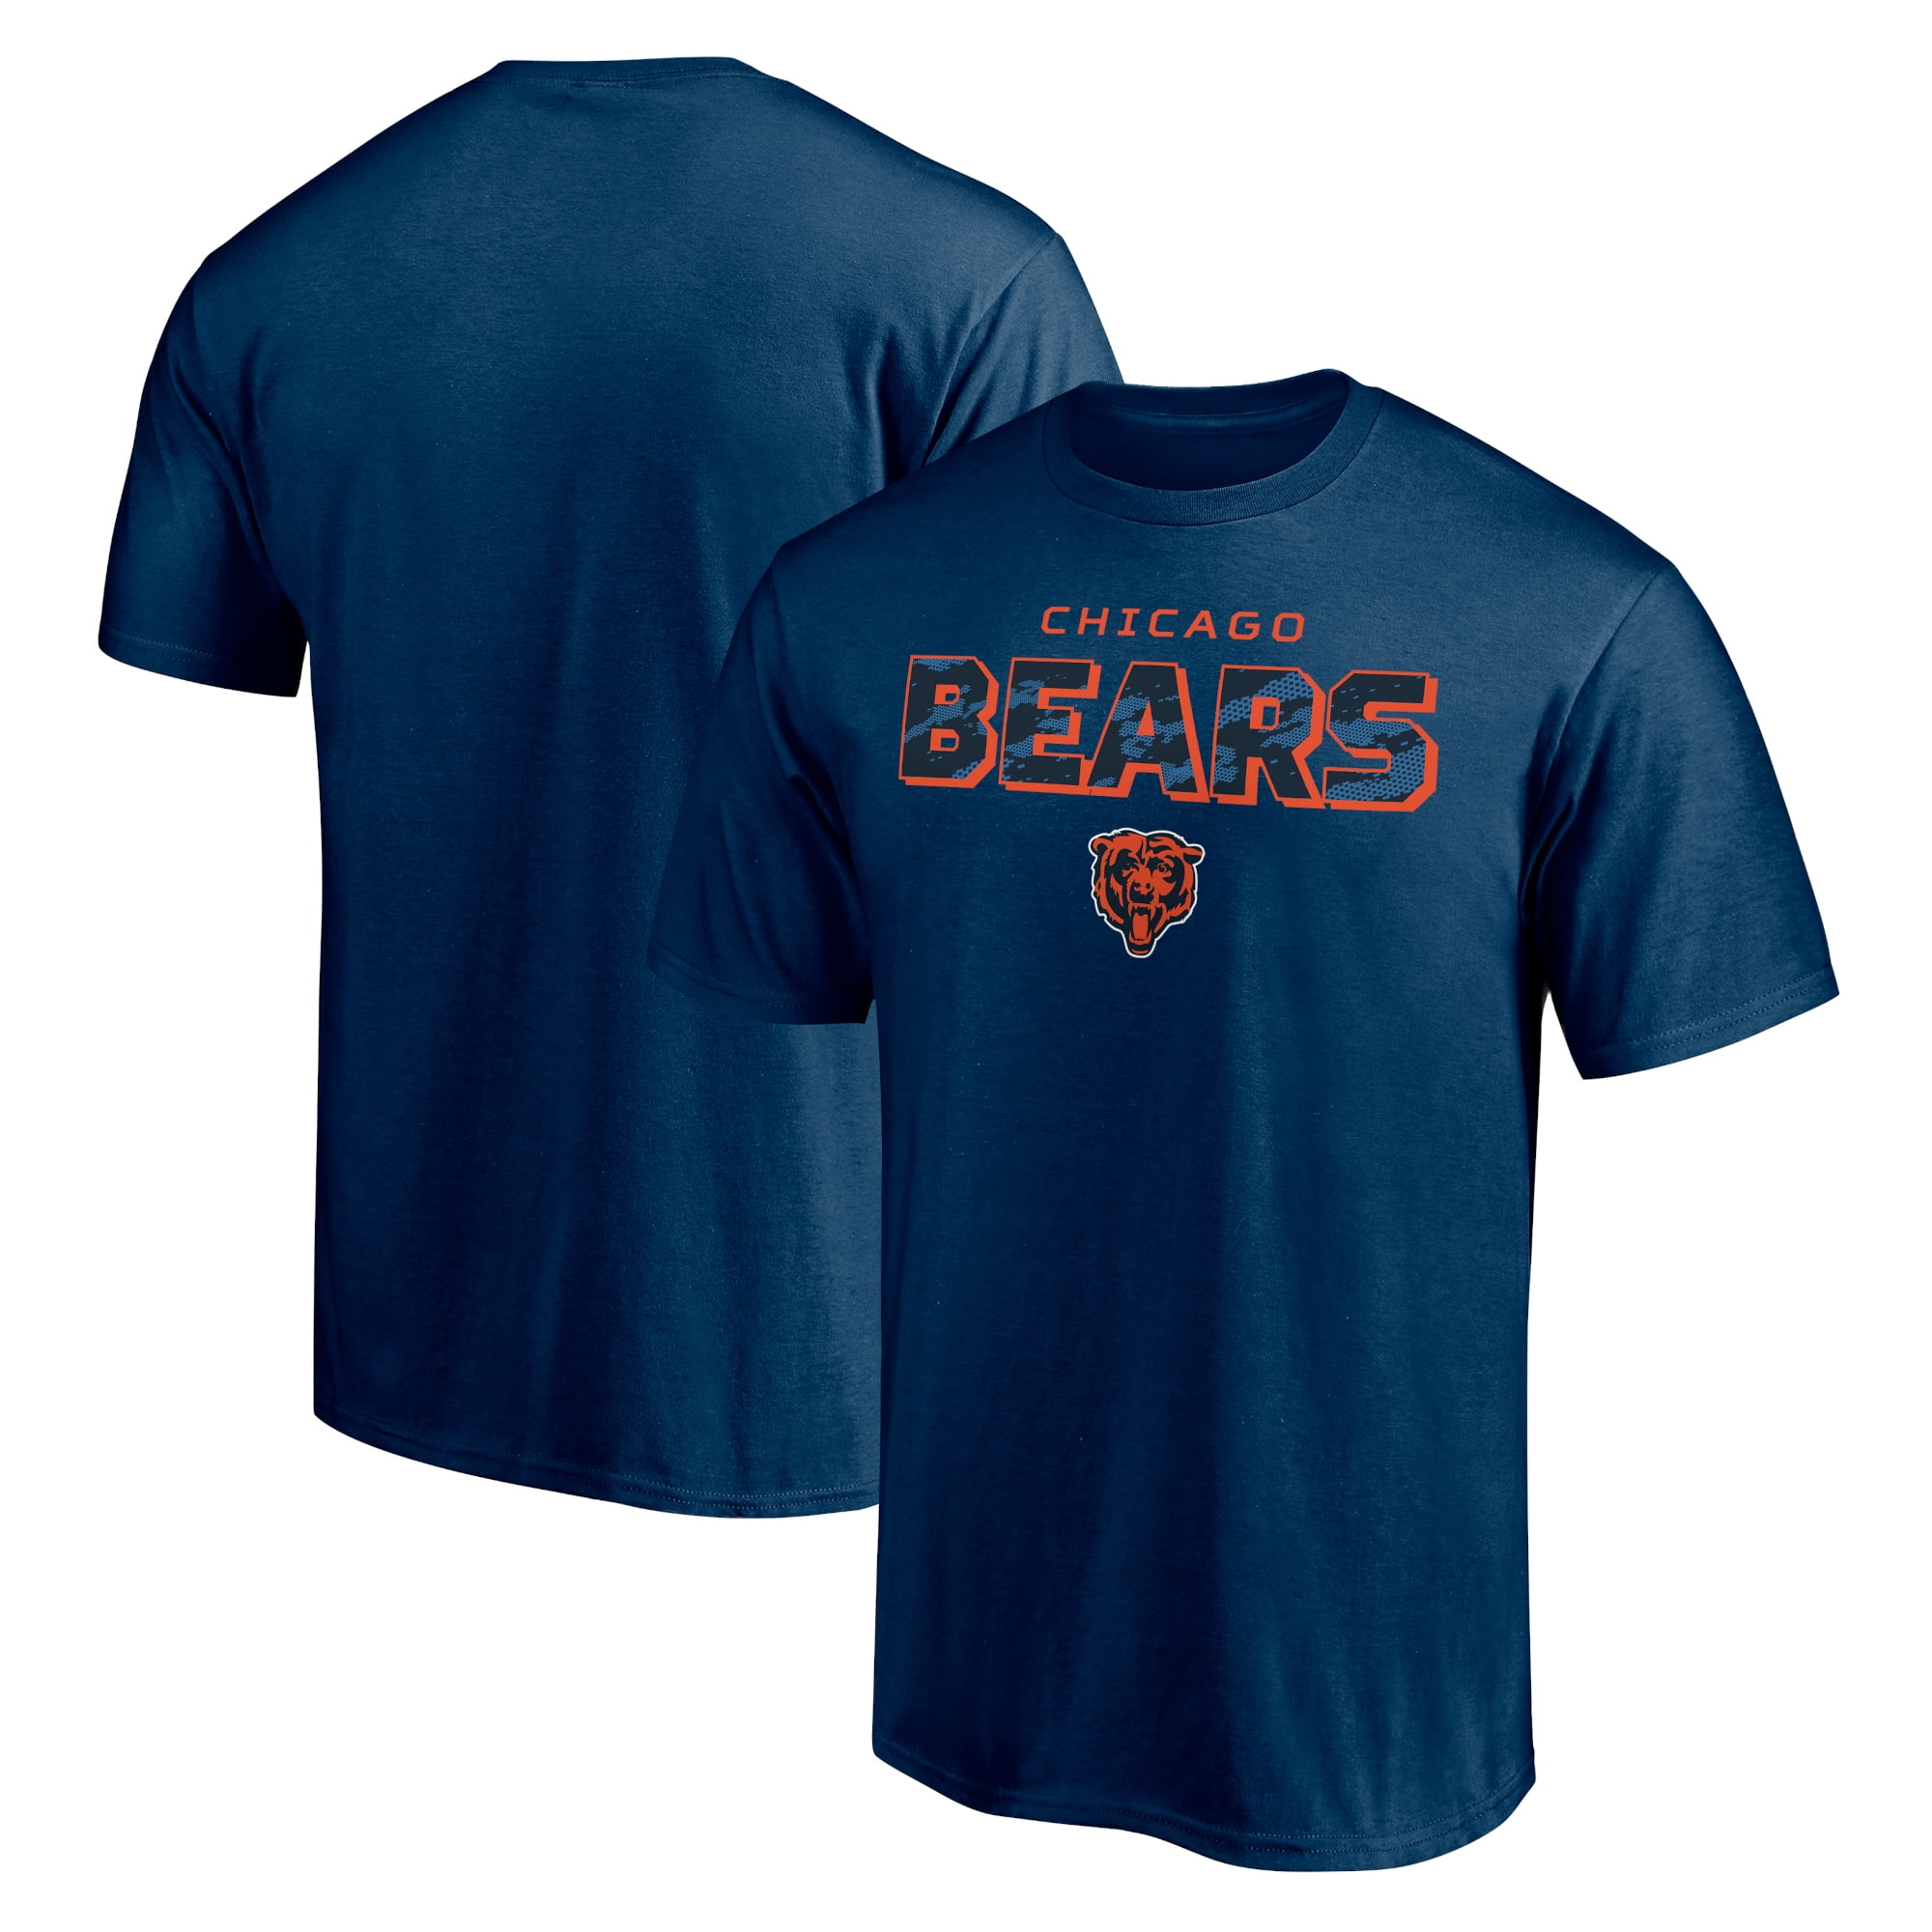 unique chicago bears shirts